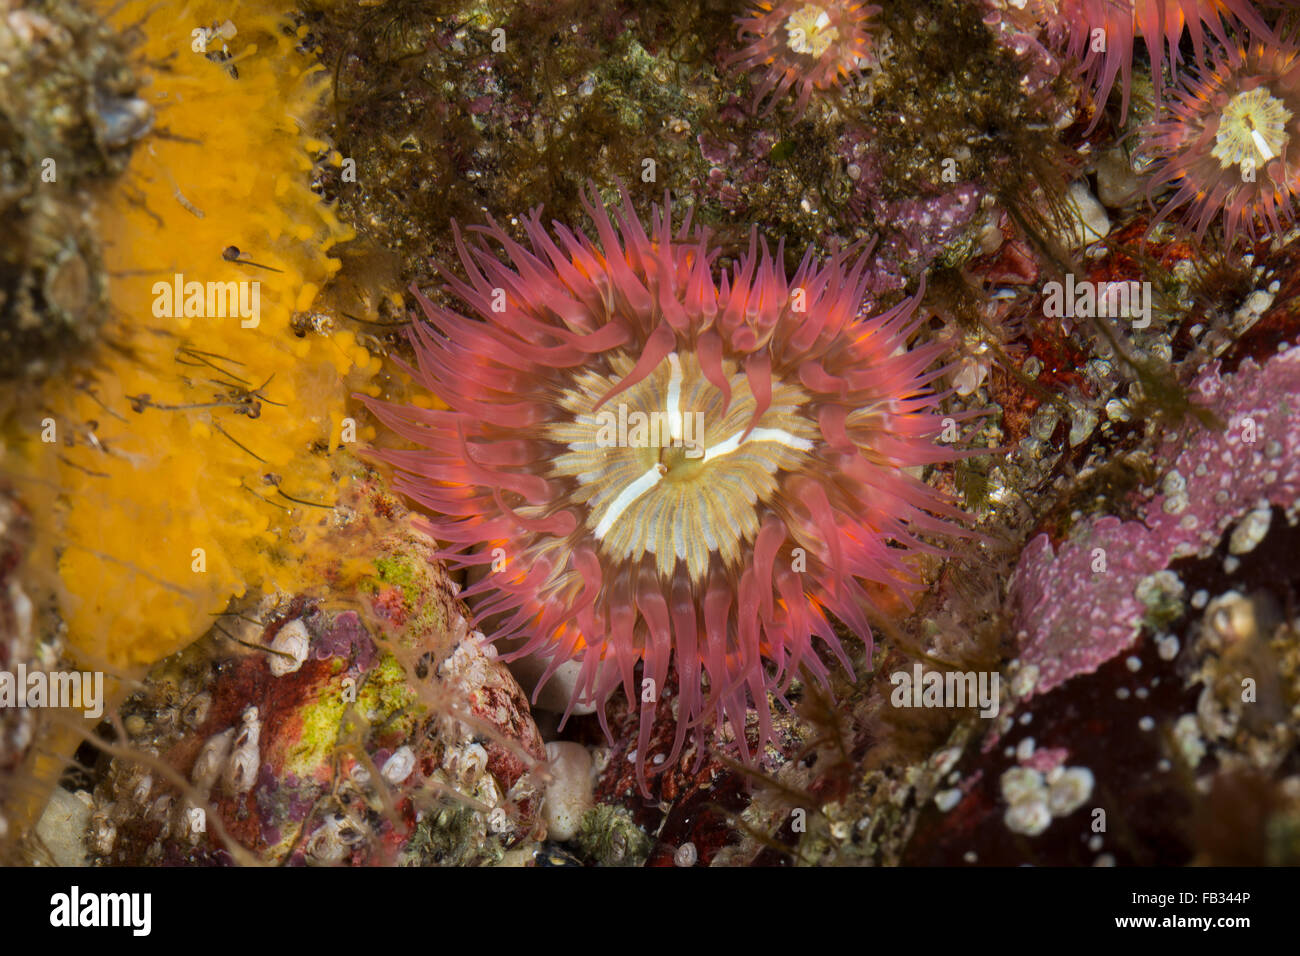 Elegant anemone, Tangrose, Sagartia elegans, Sagartia elegans var. rosea, Actinia elegans, sagartie de vase, Seeanemone Stock Photo